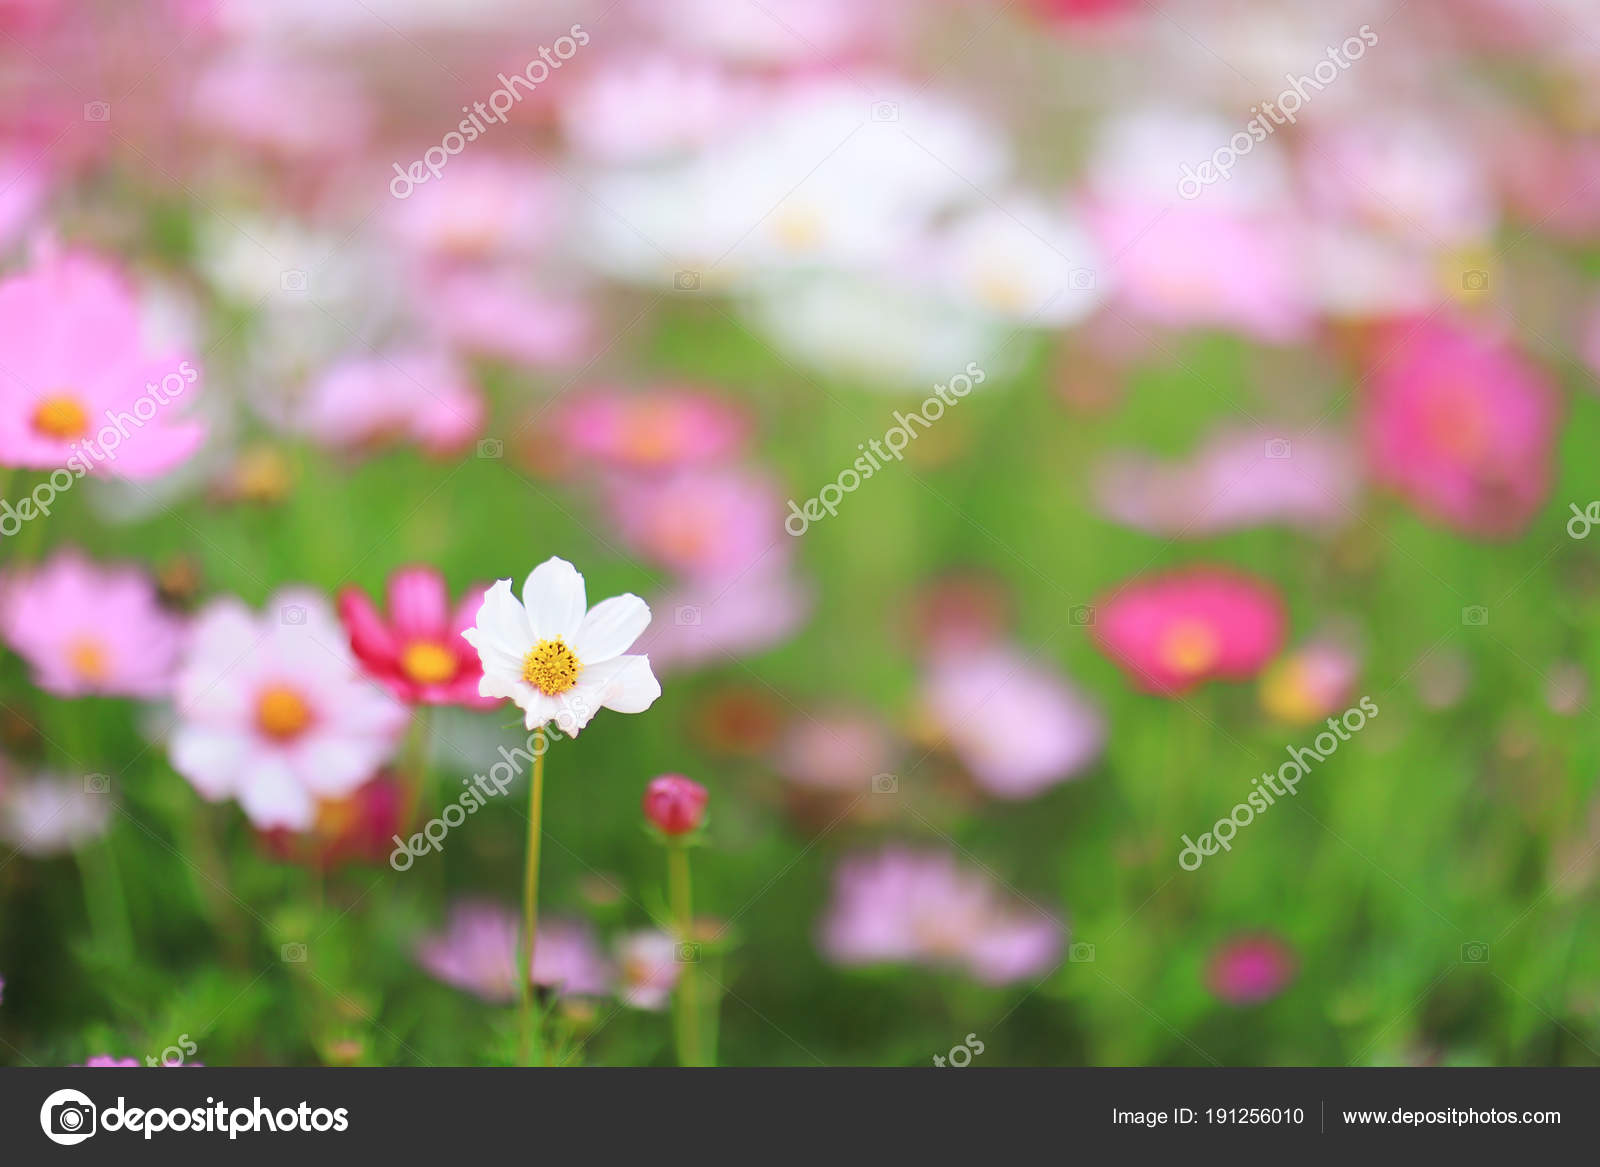 Cosmos Bipinnatus Color Flower Bed In Spring Stock Photo C Sameashk Yahoo Com Hk 191256010